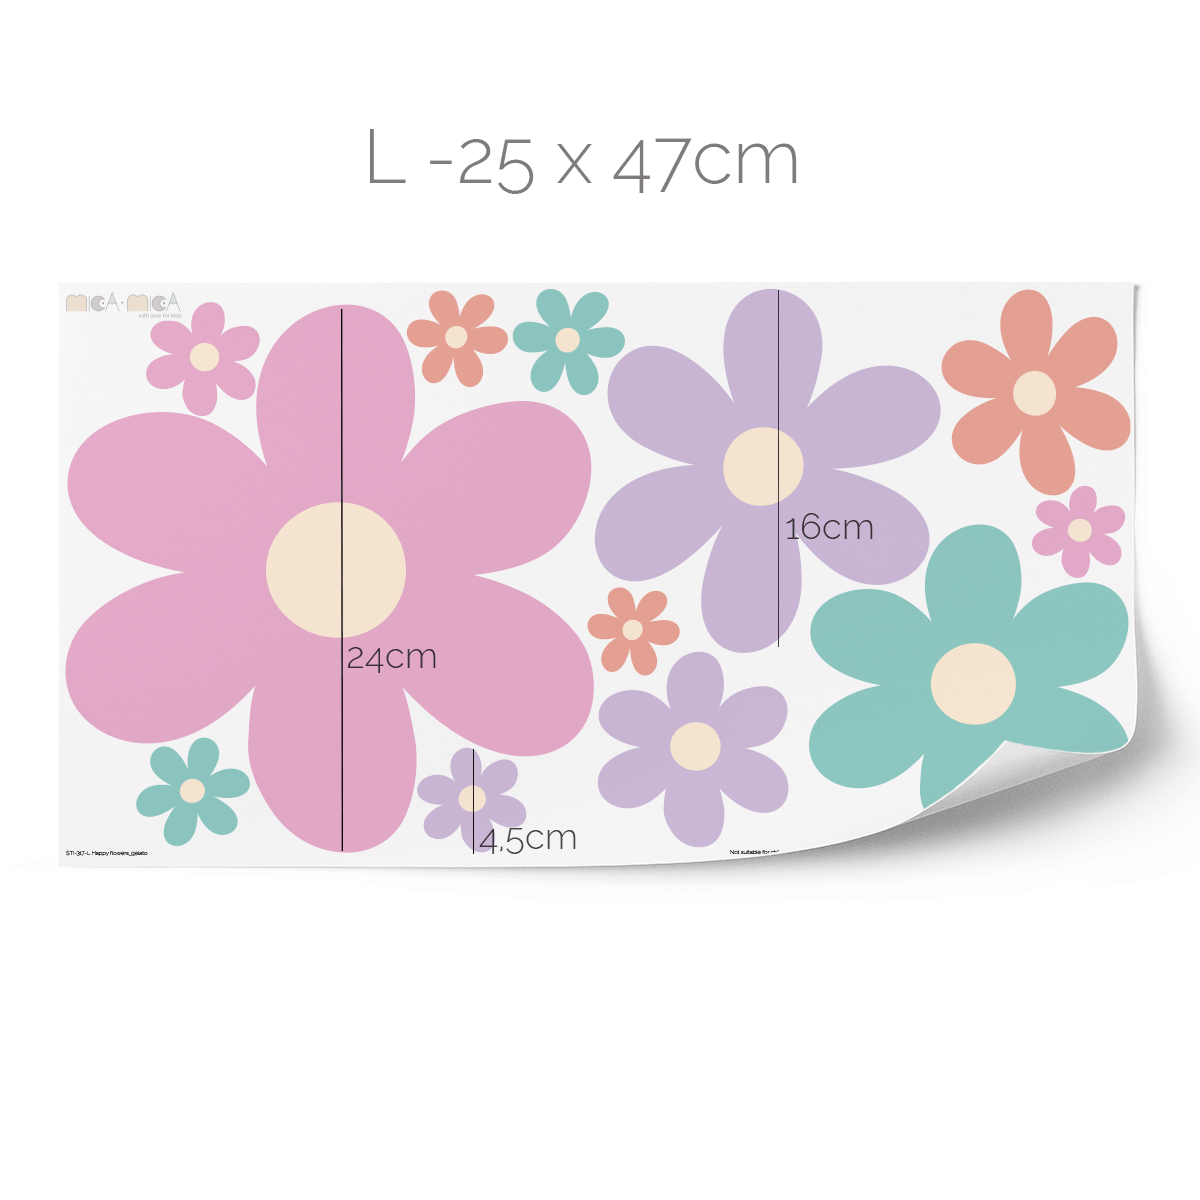 Flower wall stickers - Happy blooms (gelato)